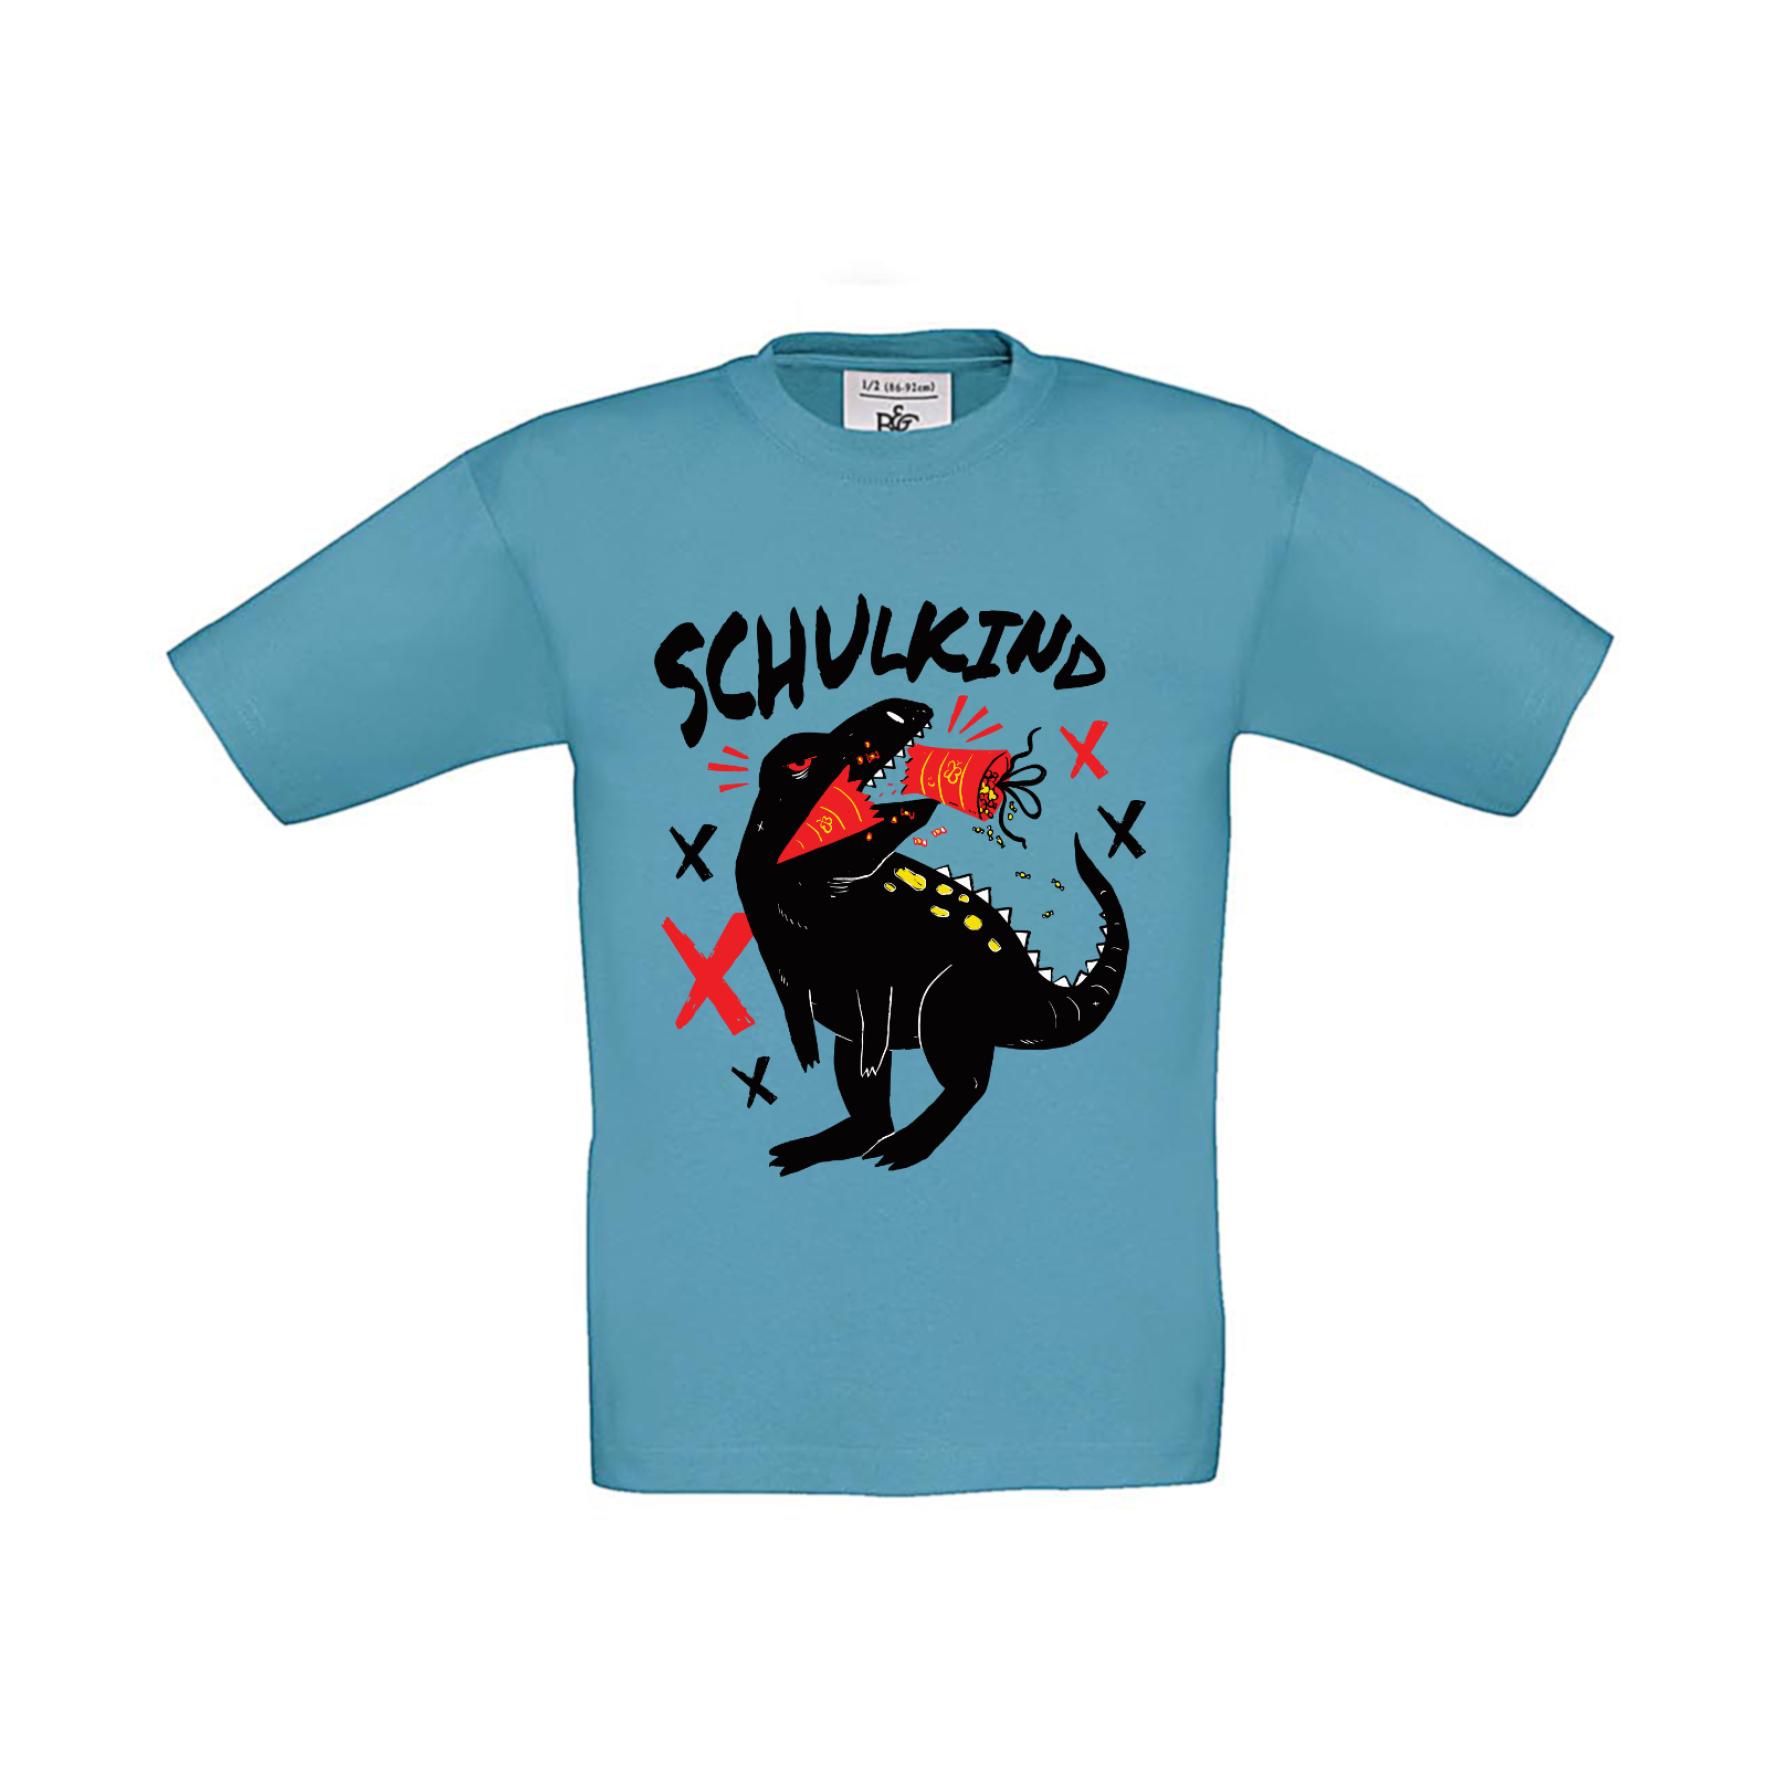 T-Shirt Kinder Schule - Schulstart Schulkind T-Rex